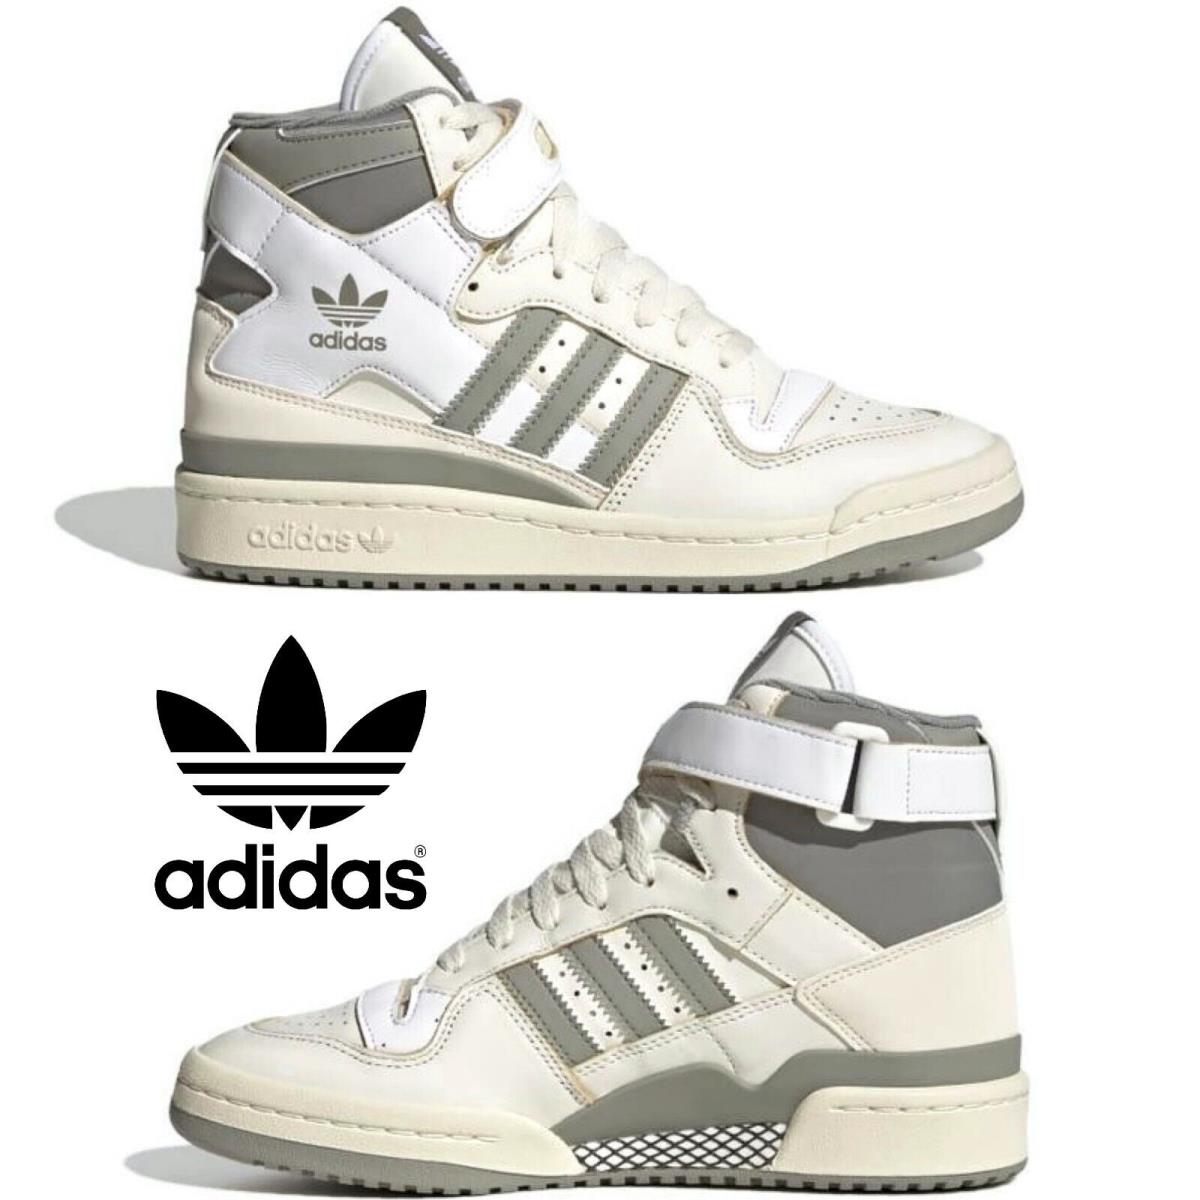 Adidas Originals Forum 84 Hi Shoes Women`s Sneakers Comfort Casual White Silver